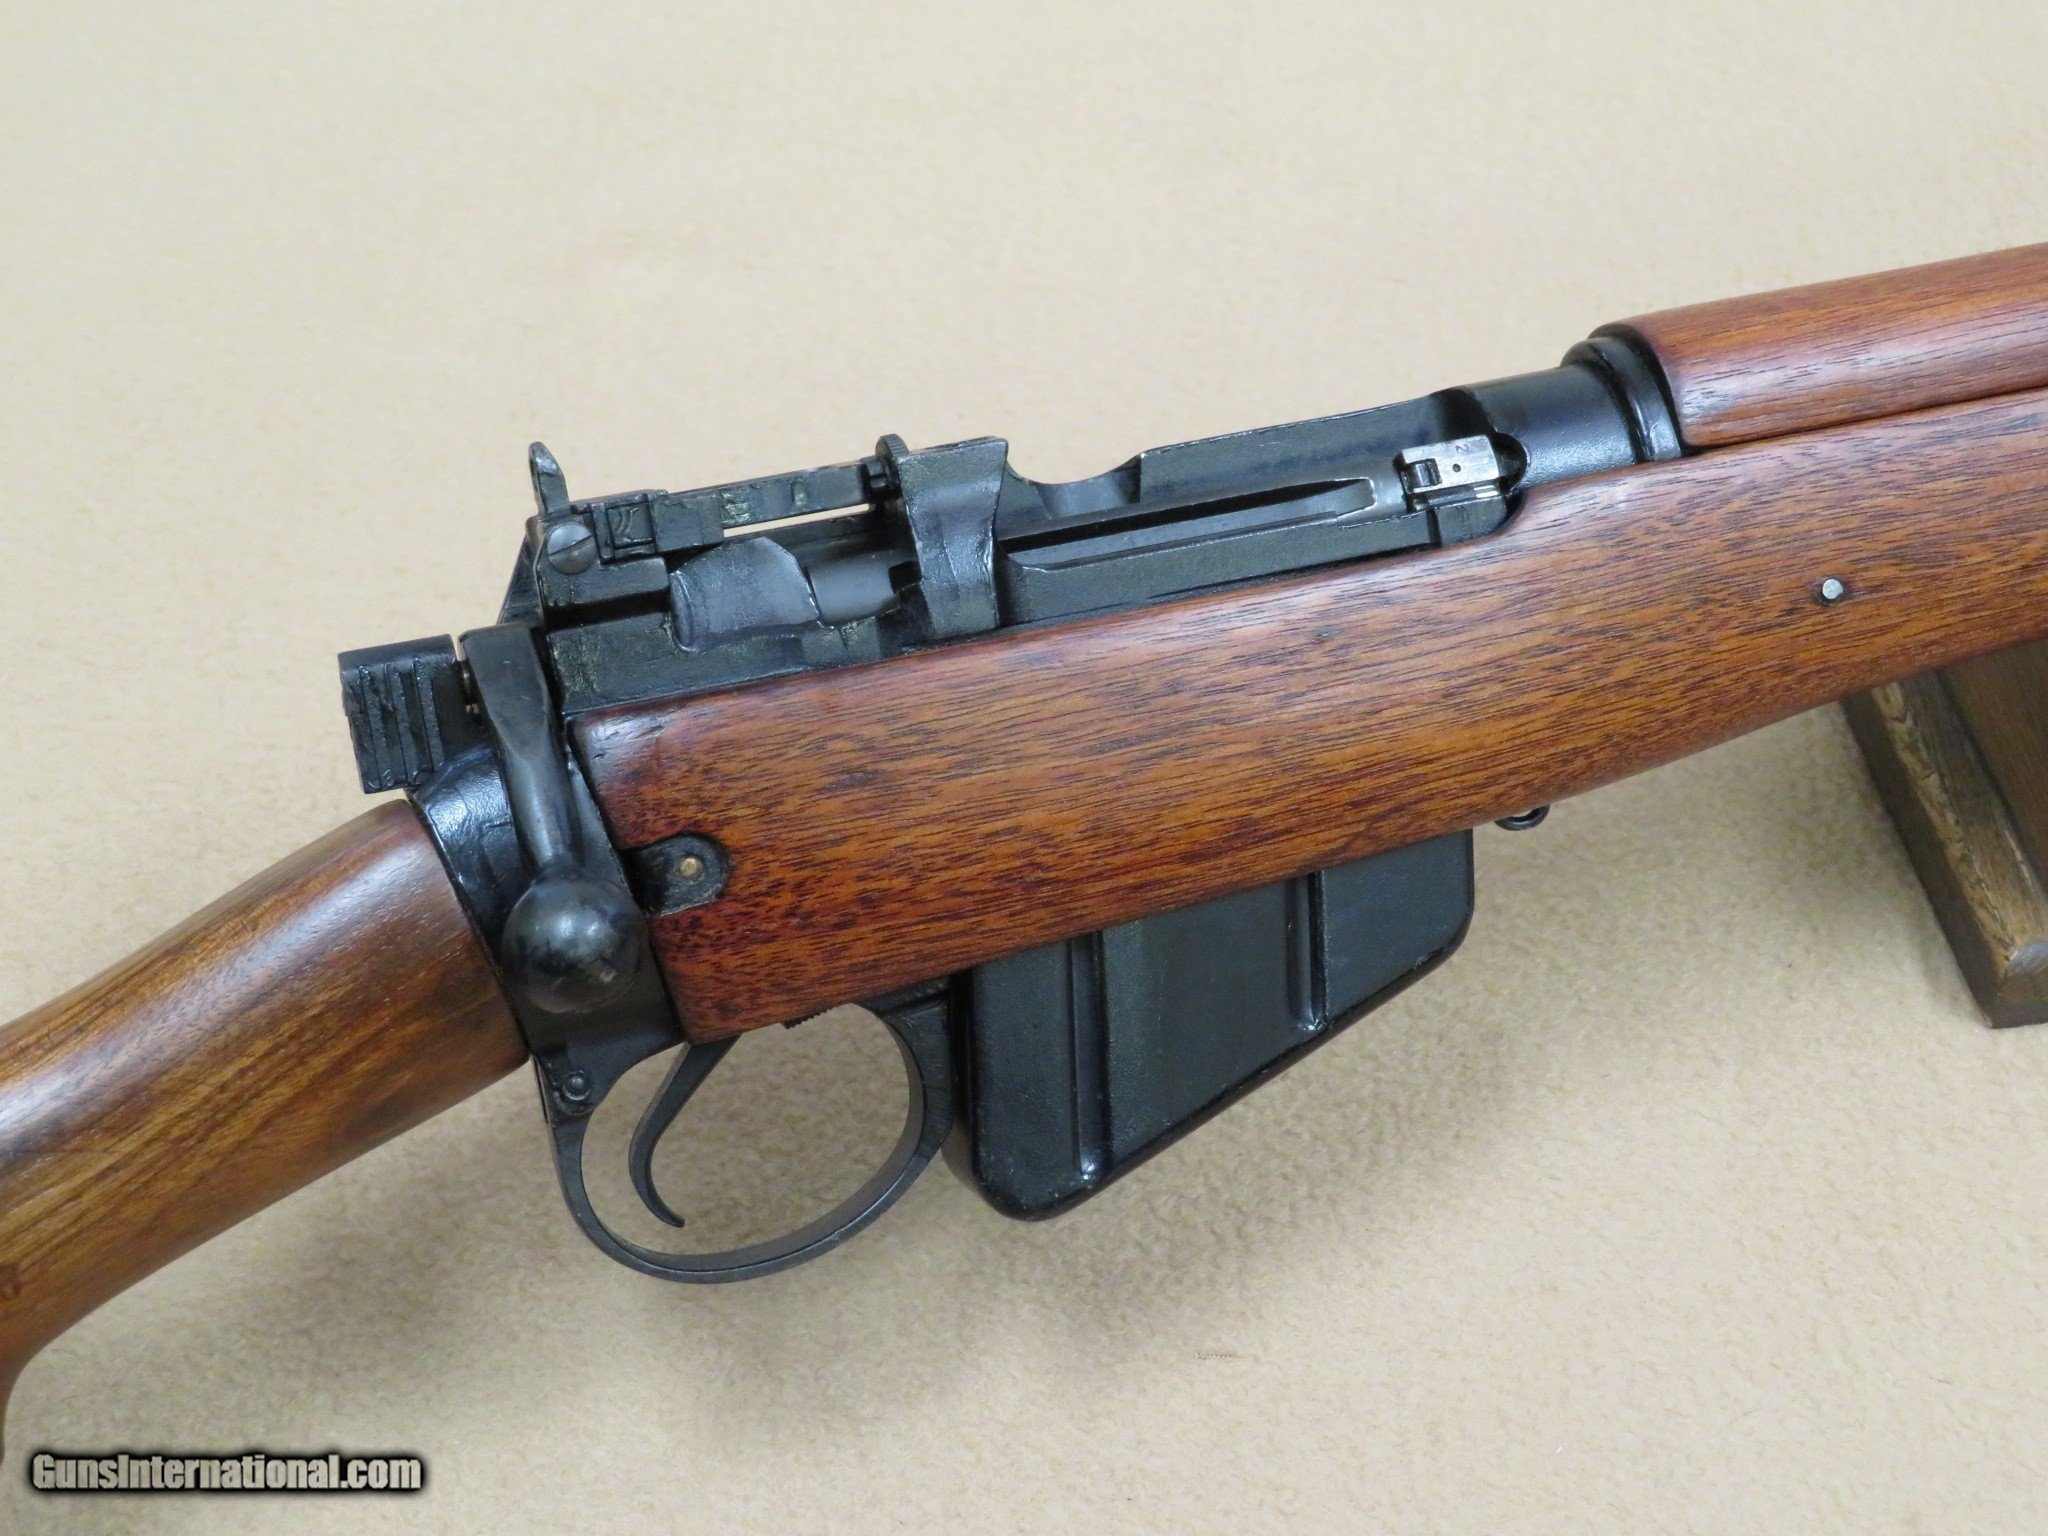 https://images.gunsinternational.com/listings_sub/acc_70986/gi_101188230/WW2-1942-Canadian-Long-Branch-No-4-Mk-1-Enfield-Rifle-303-British-All-Matching-Original-Example_101188230_70986_BF09AE6034FA9E81.JPG